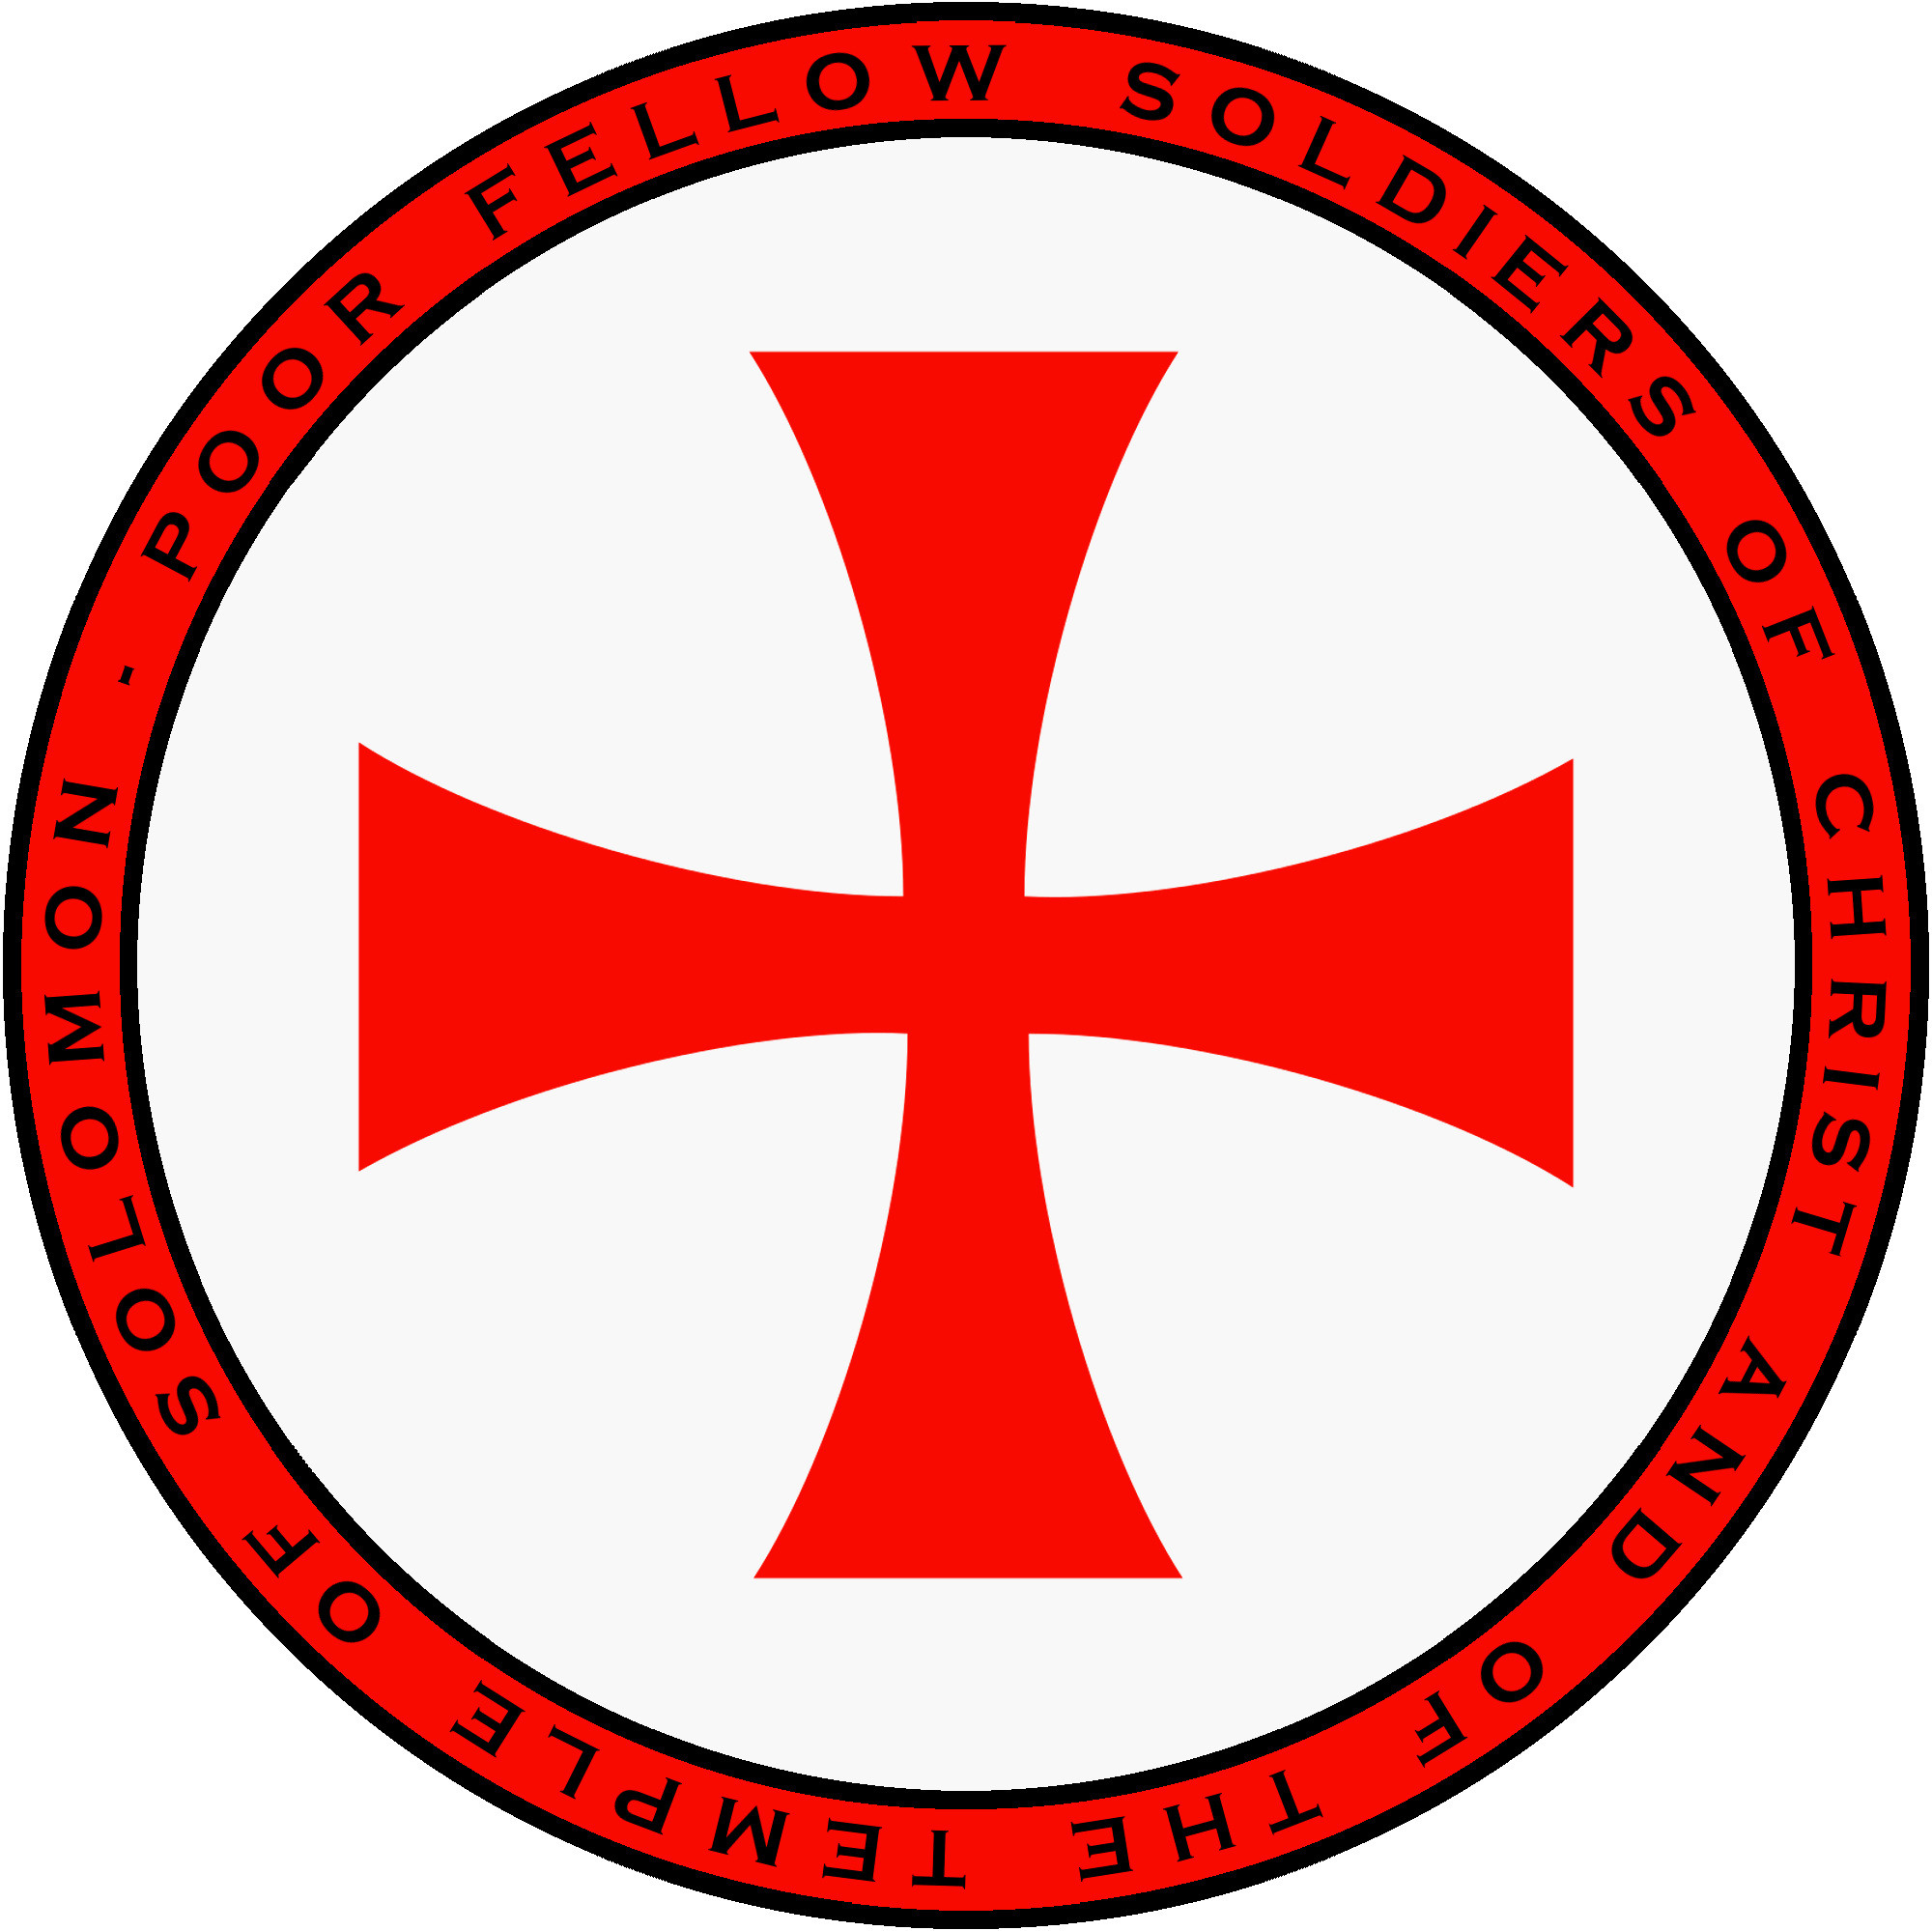 2000x1999 Knights Templar Symbols Images Knights Templar Round Seal by  Williammarshalstore On